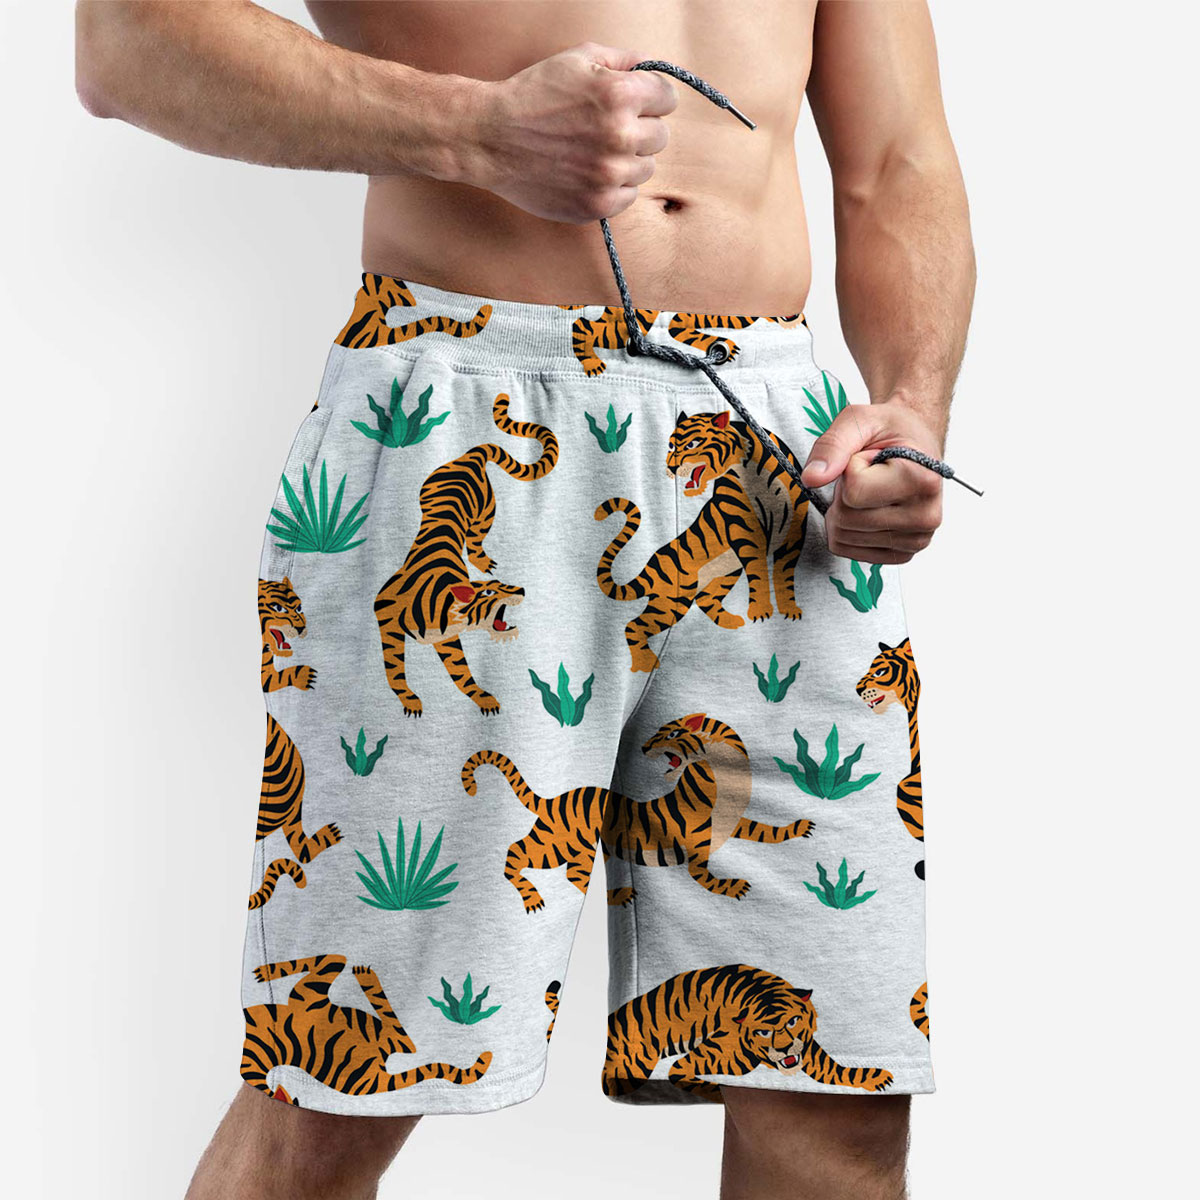 Tiger And Grass Shorts 6